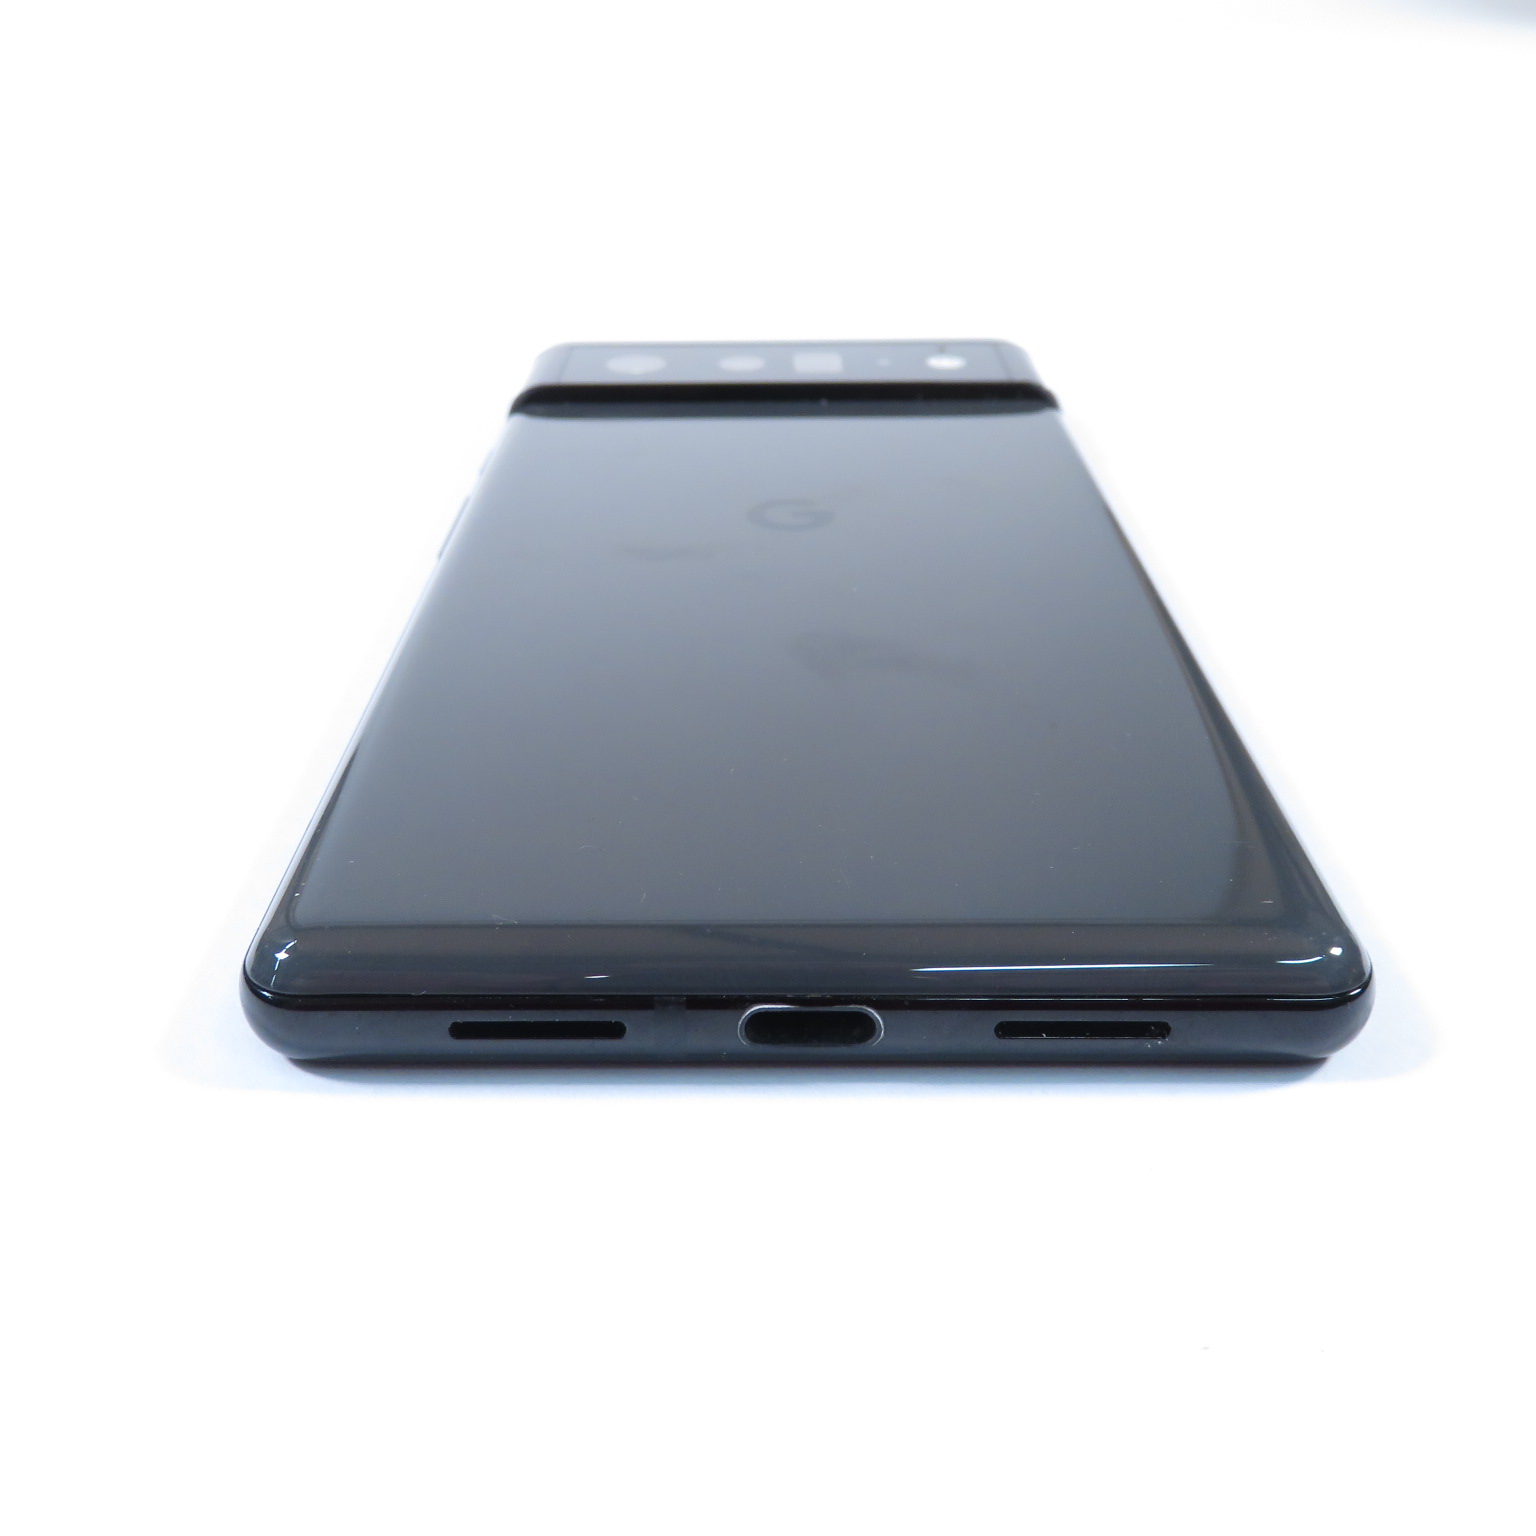 Google Pixel 6 Pro 128GB - Black - Unlocked